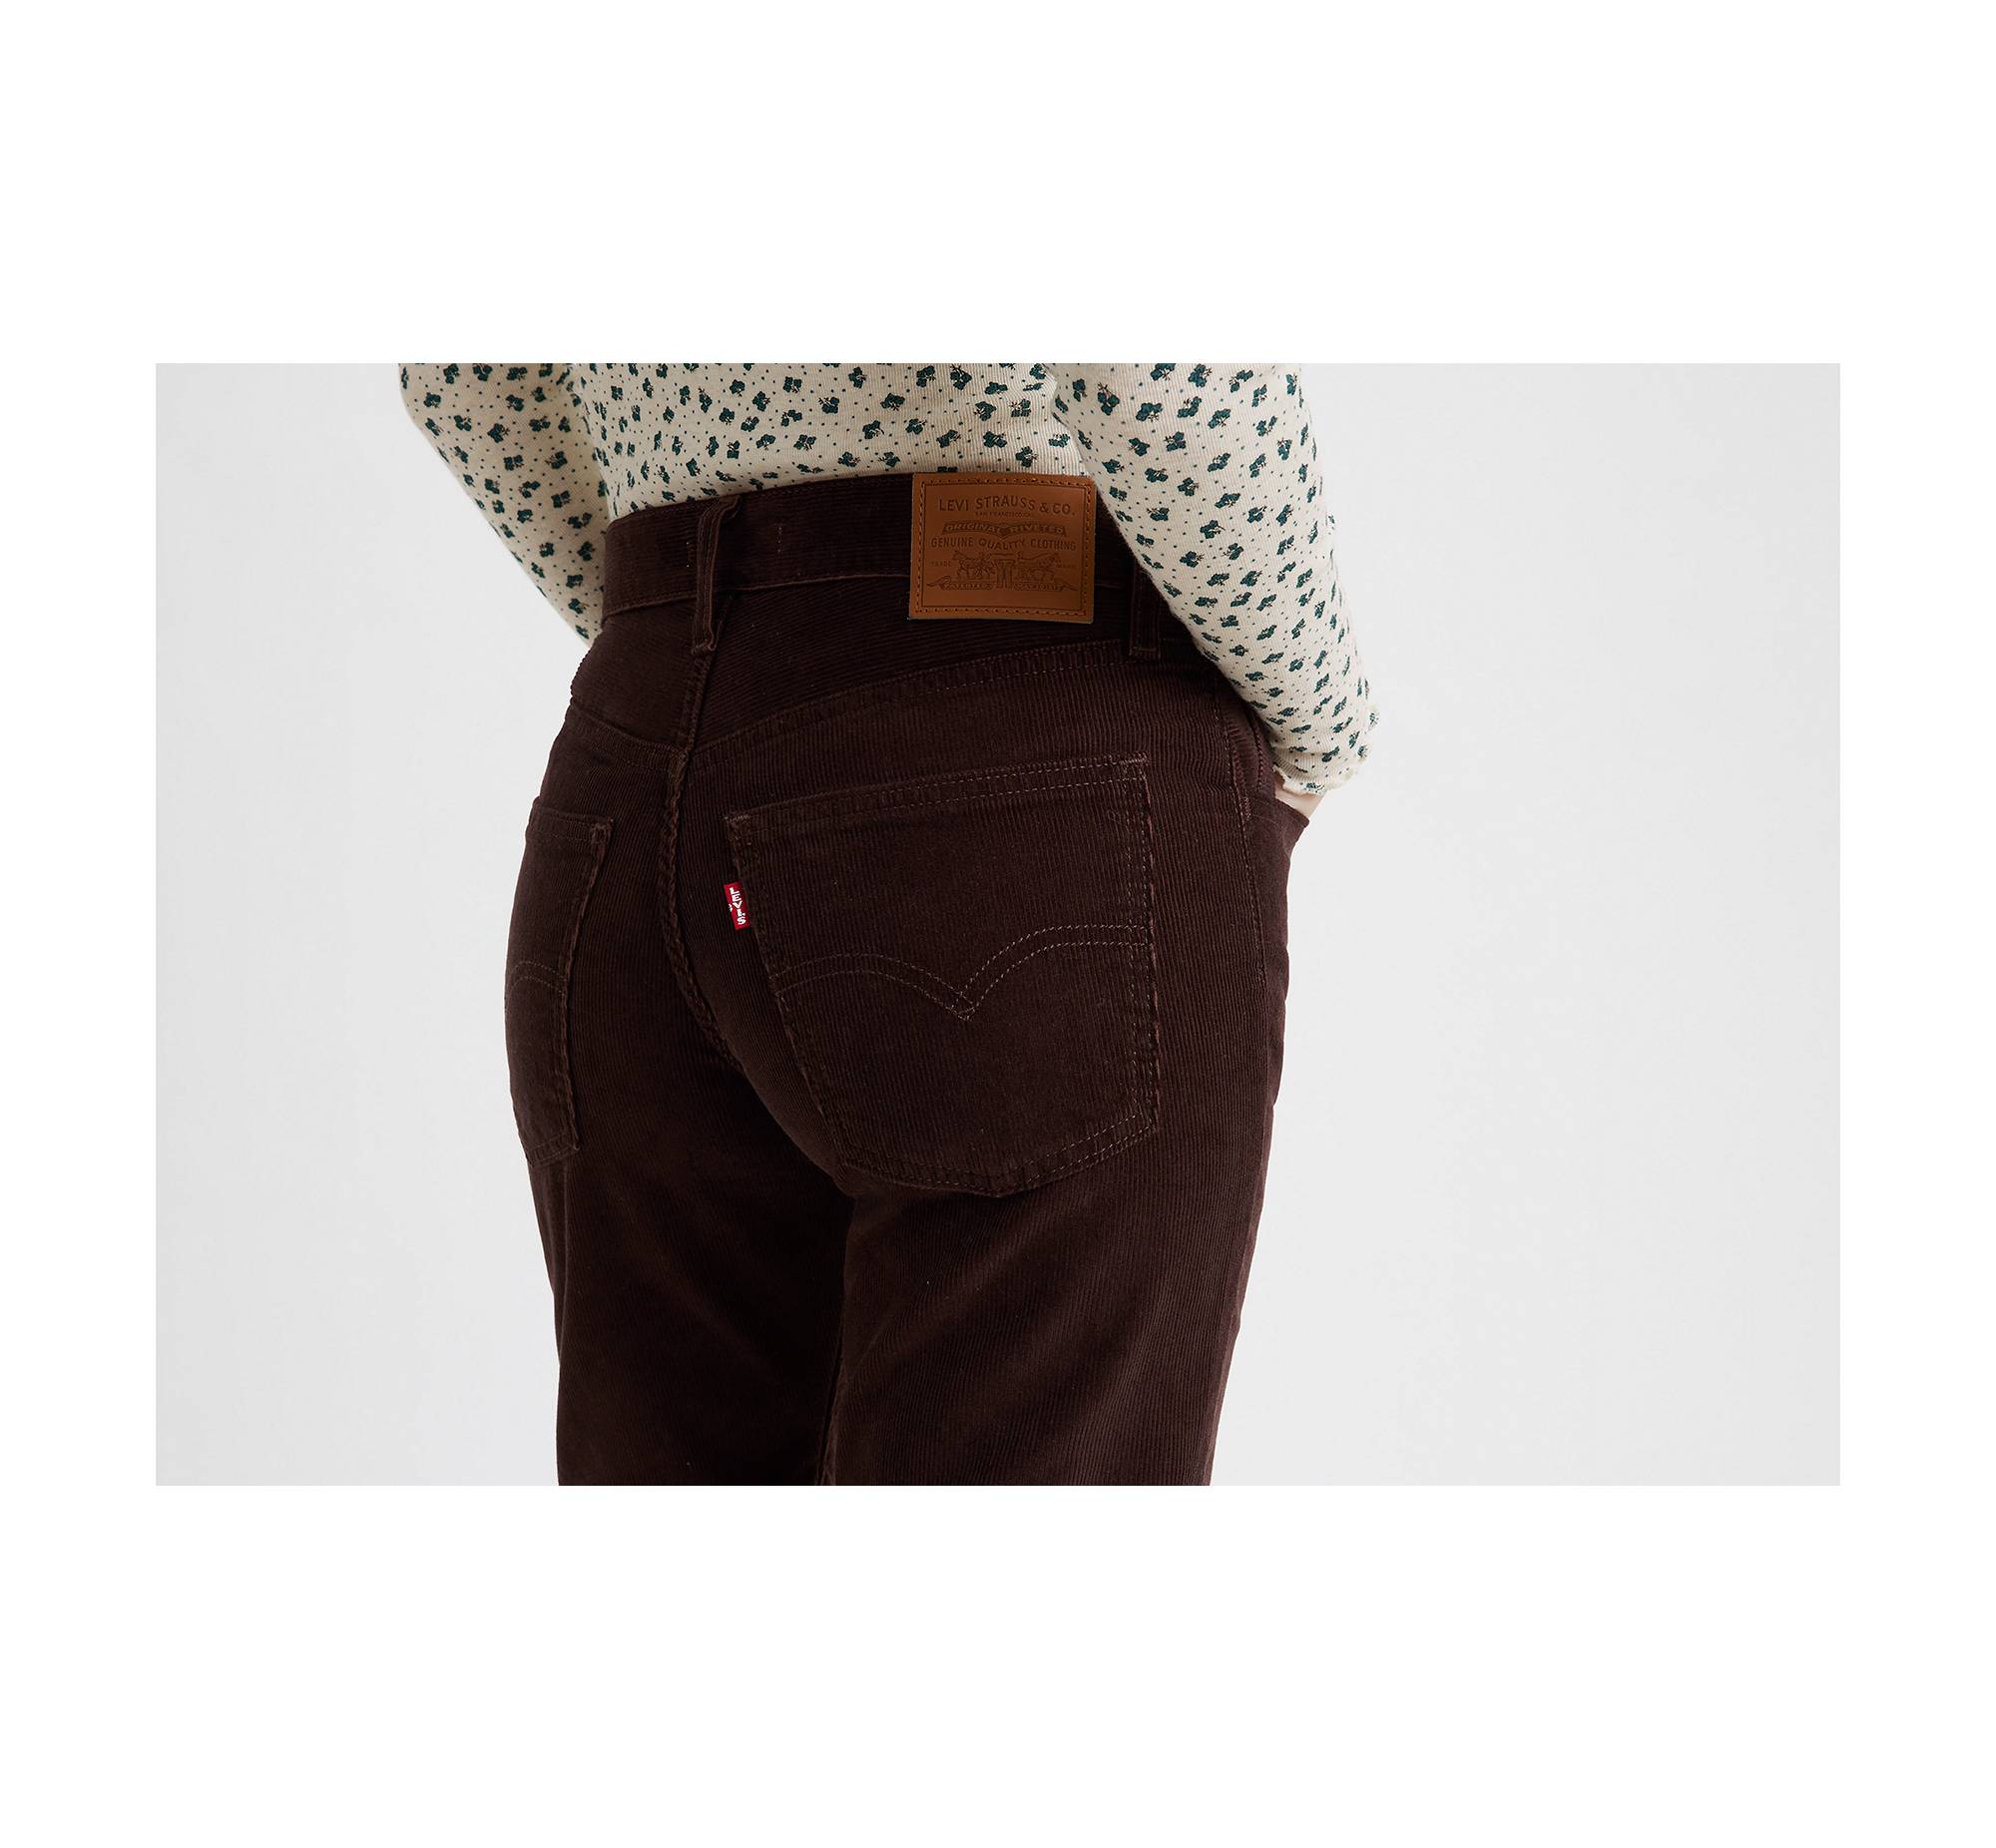 Stradivarius flare pants with split detail in chocolate